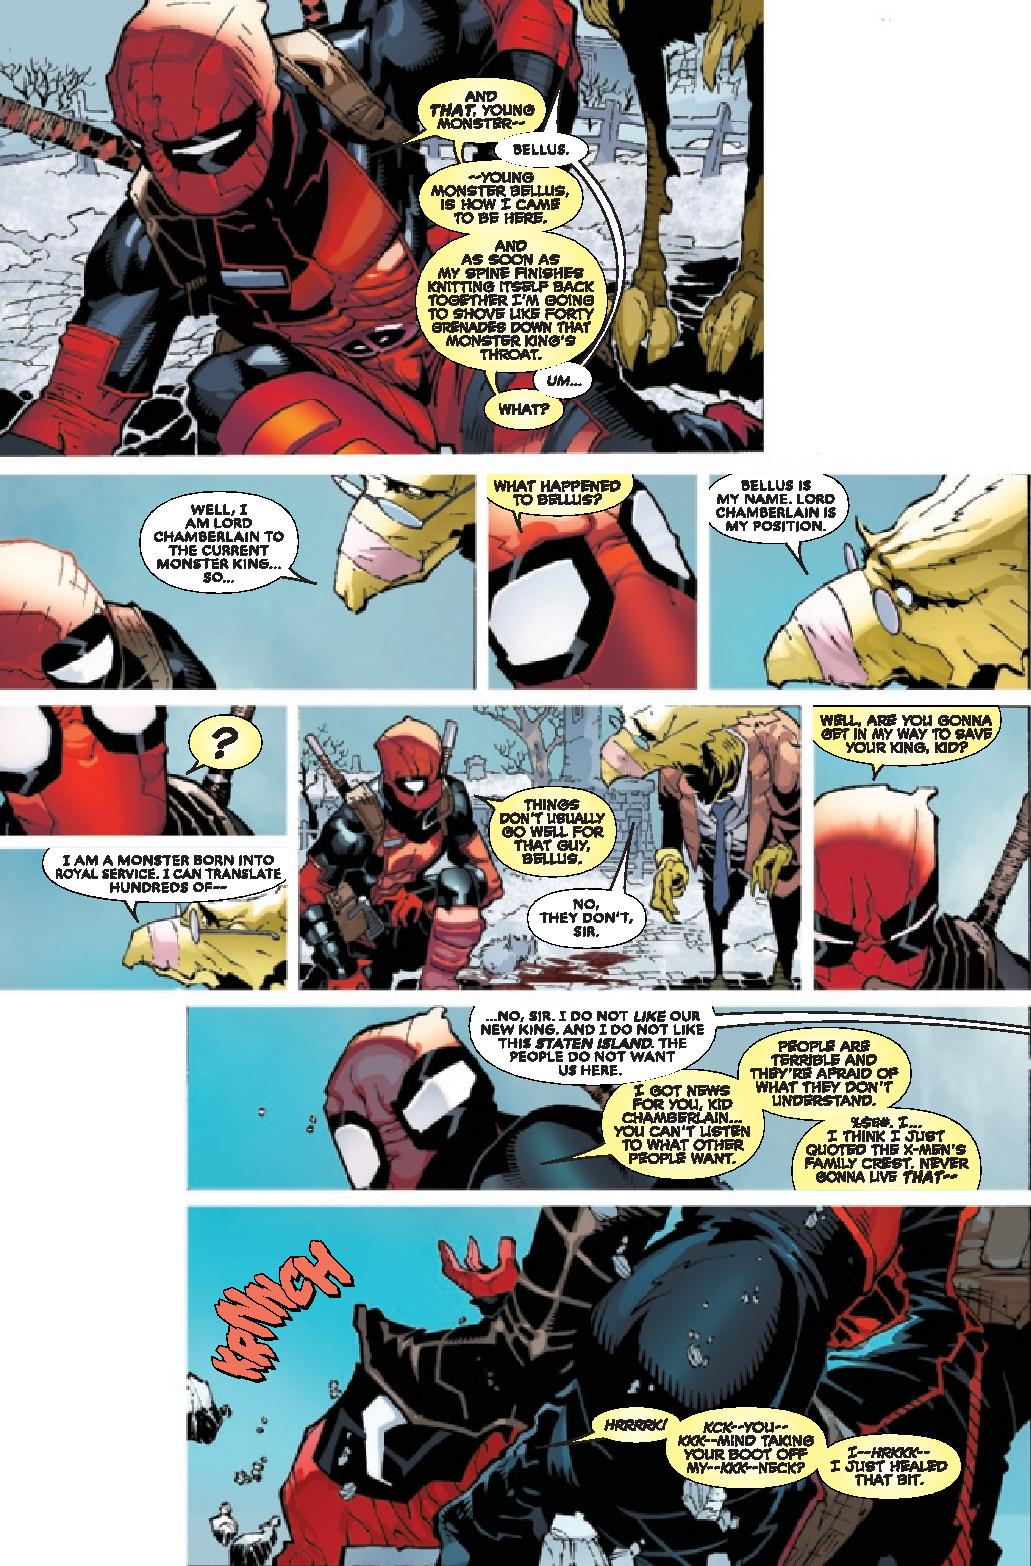 Deadpool #1 Finch Sketch Variant